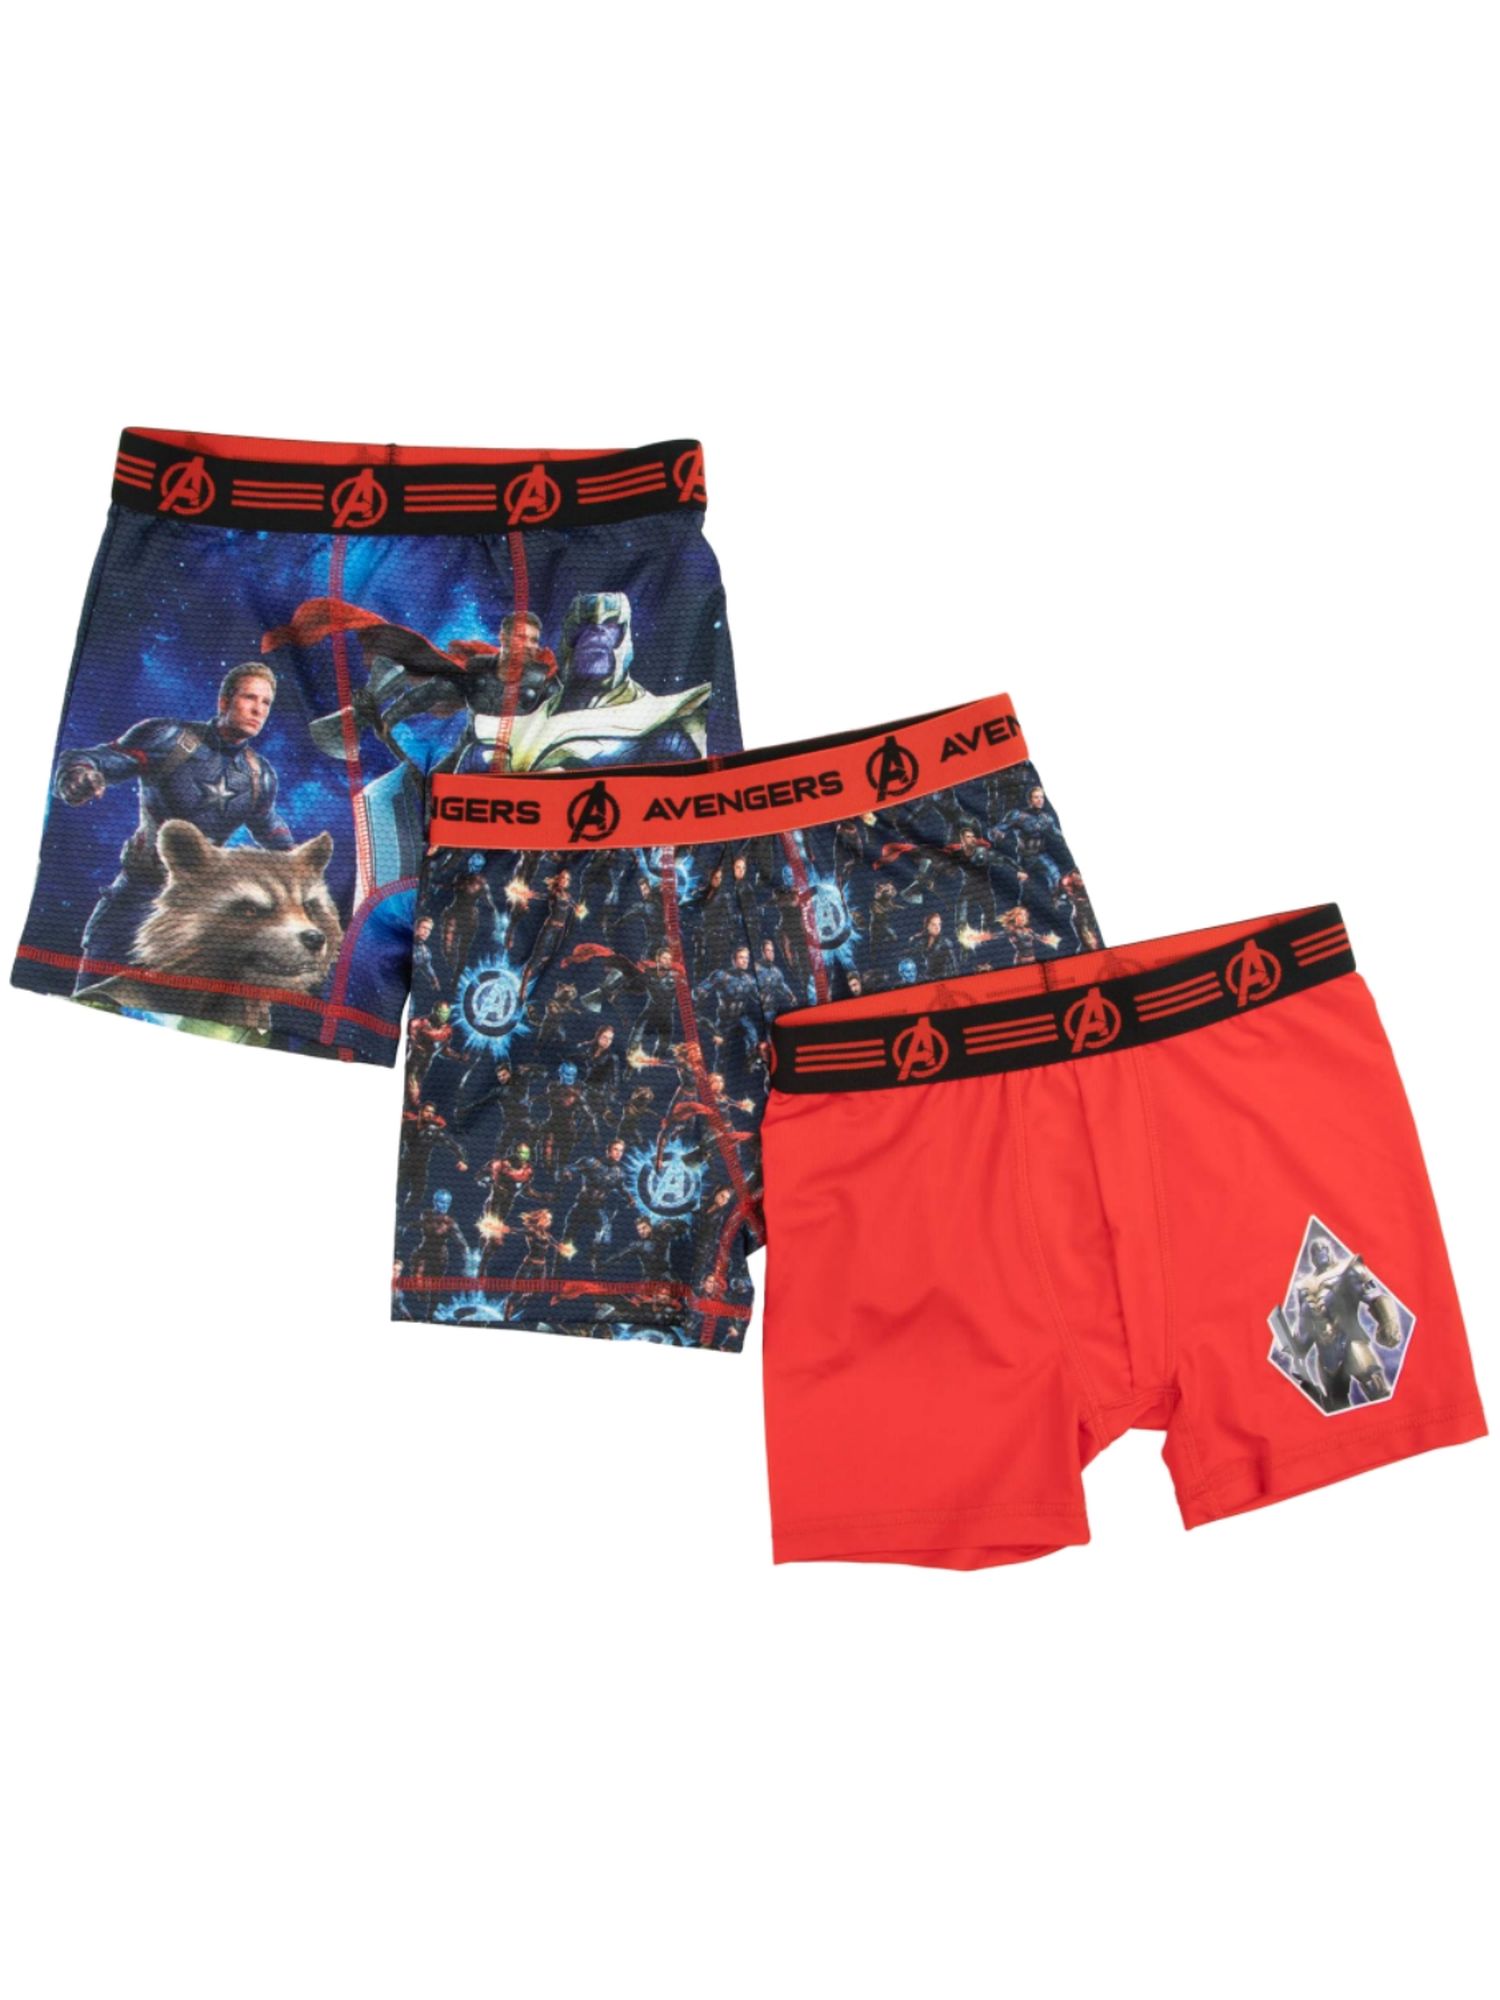 Bioworld Marvel Boys Avengers Infinity War 3pc Boxer Briefs Boxer Shorts  Set Underwear